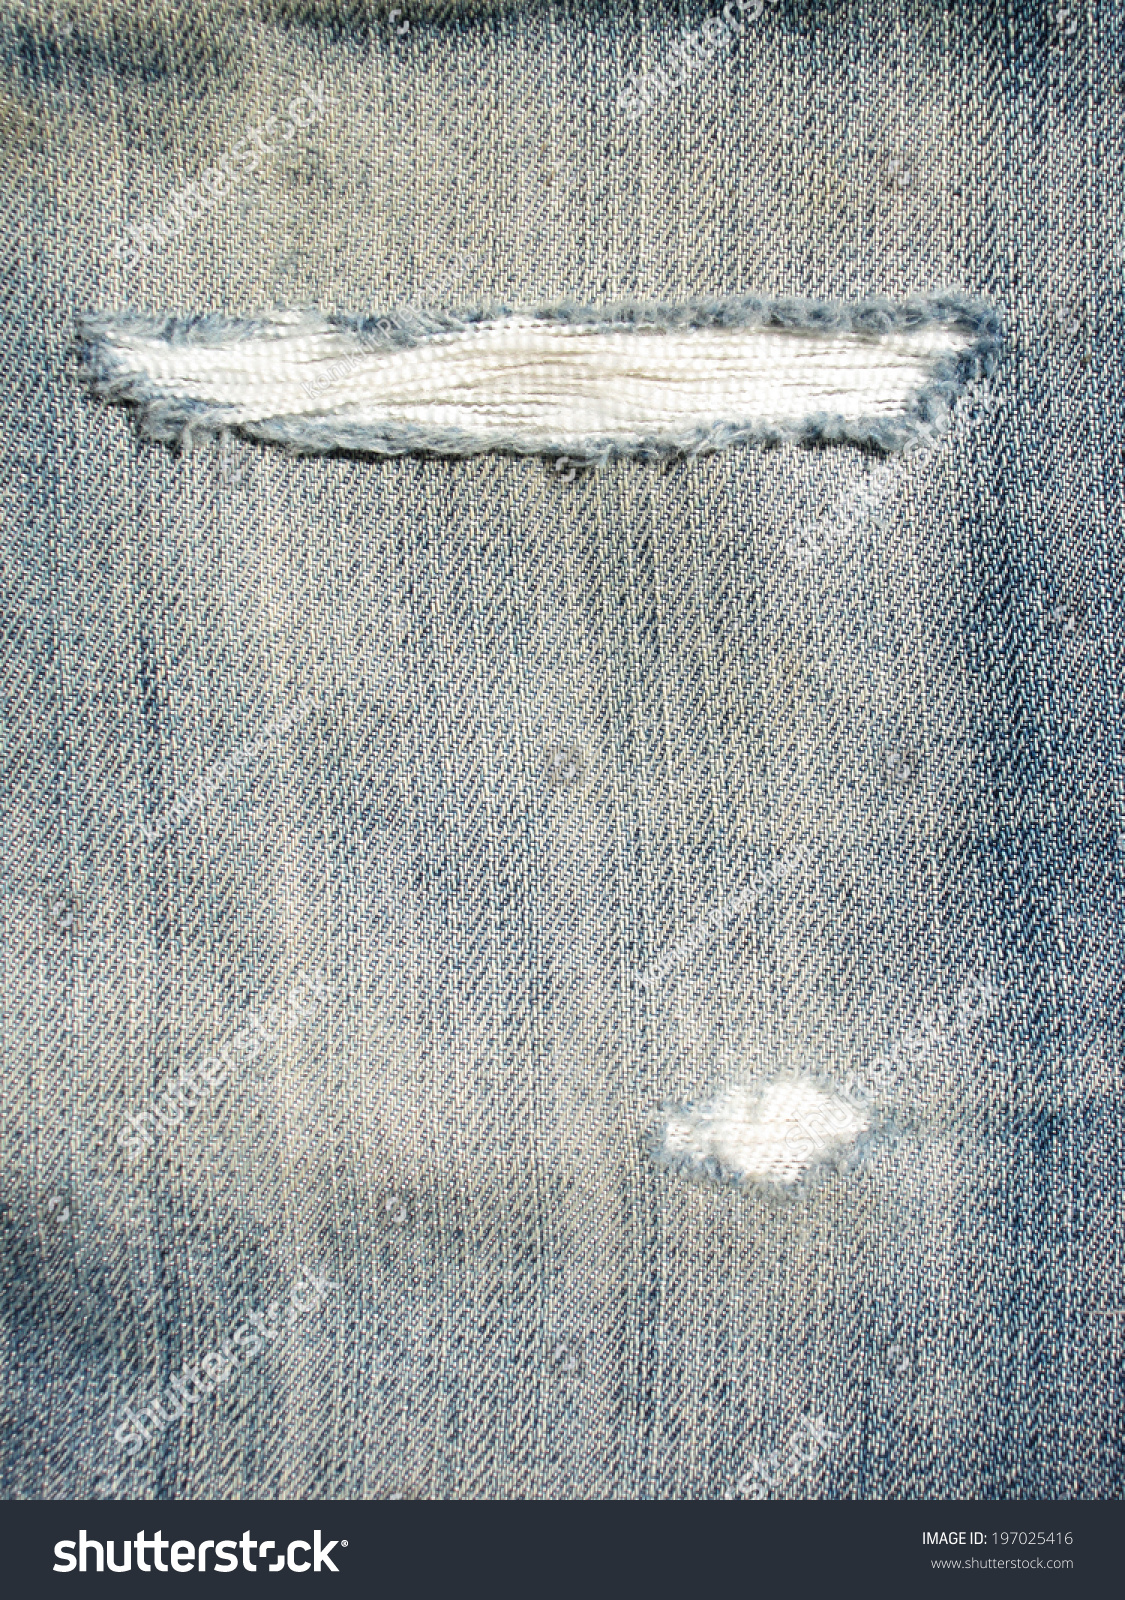 Torn Jeans Closeup Stock Photo 197025416 | Shutterstock